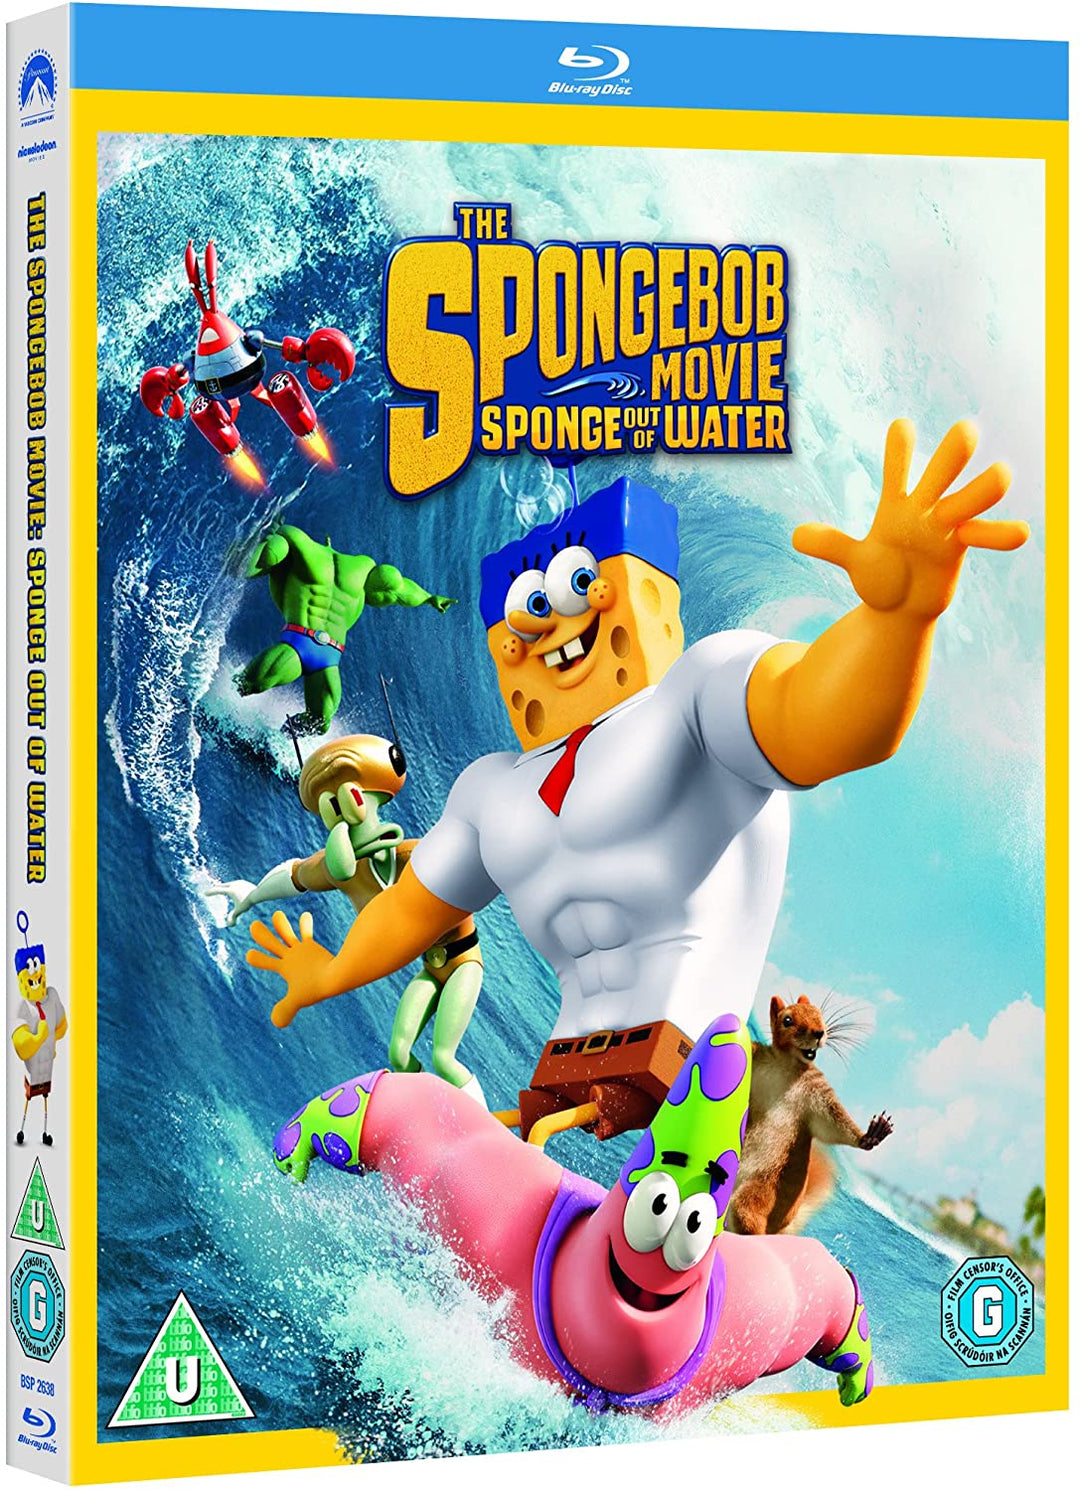 The Spongebob Movie: Sponge Out of Water [Region Free] - Family/Comedy [DVD]